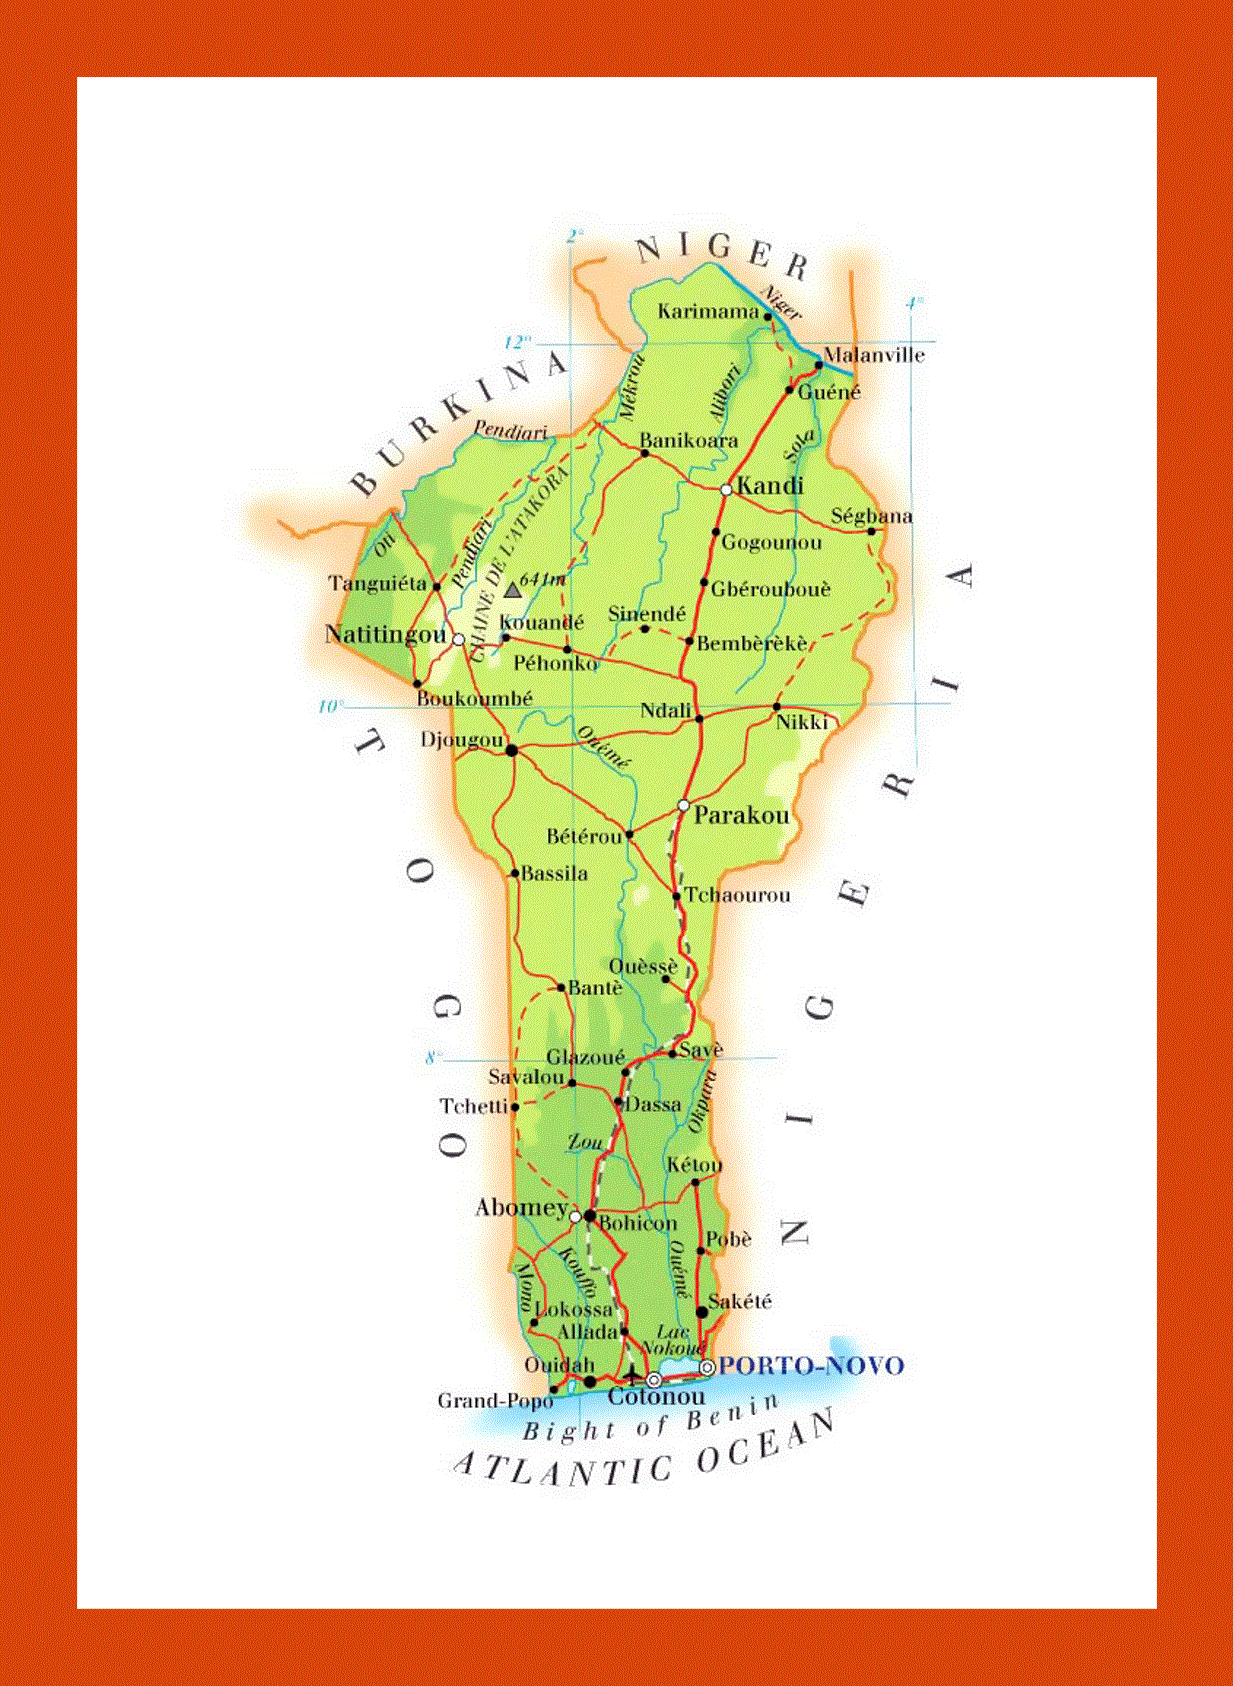 Elevation map of Benin